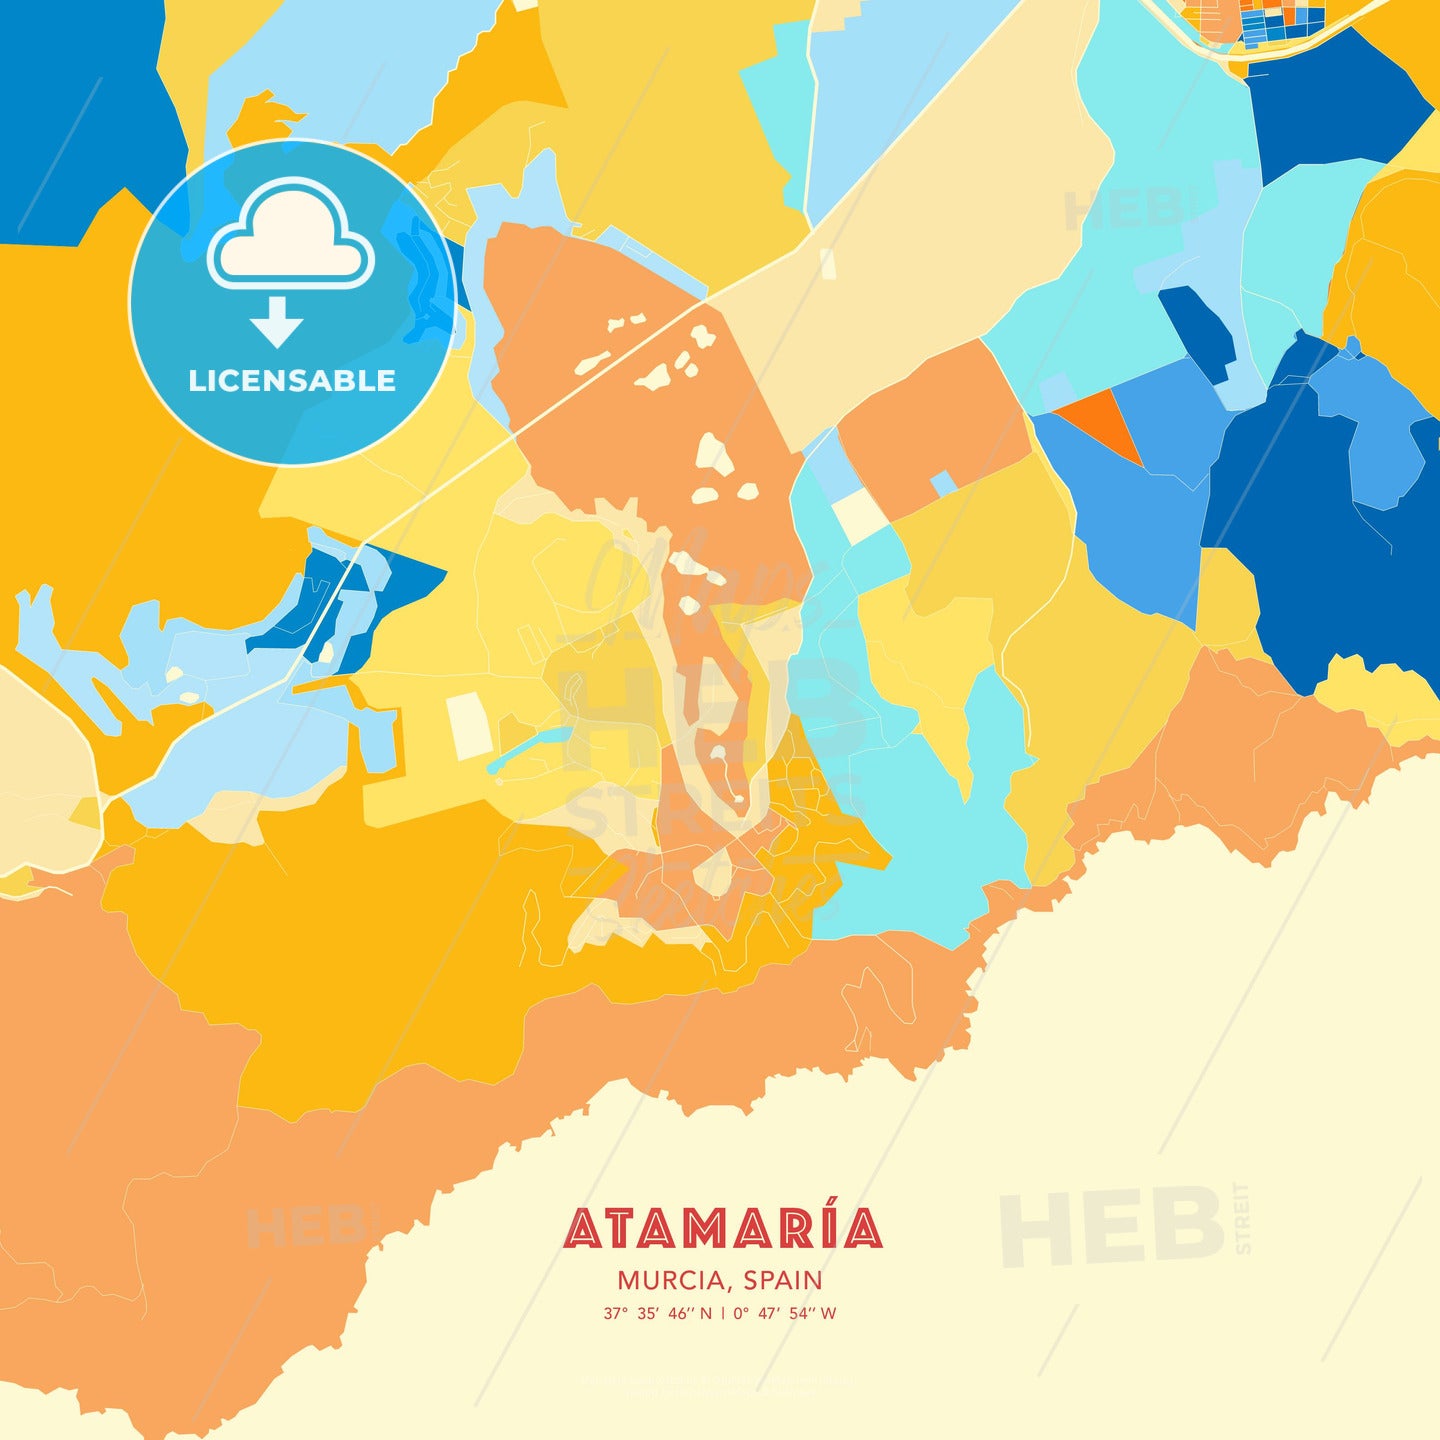 Atamaría, Murcia, Spain, map - HEBSTREITS Sketches